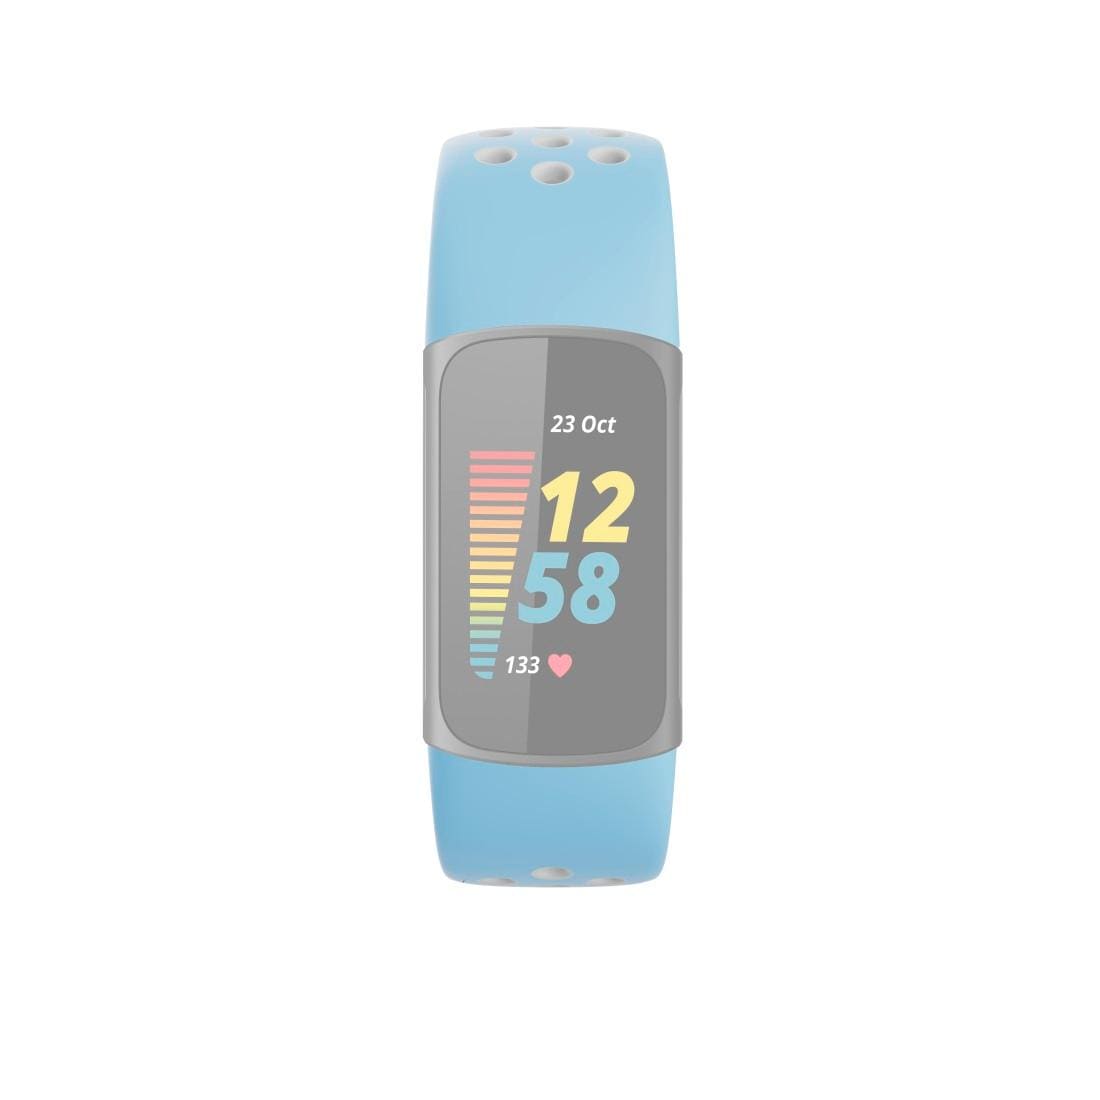 Smartwatch-Armband atmungsaktives »Sportarmband Fitbit OTTO für bei Hama Charge 5, Uhrenarmband« jetzt